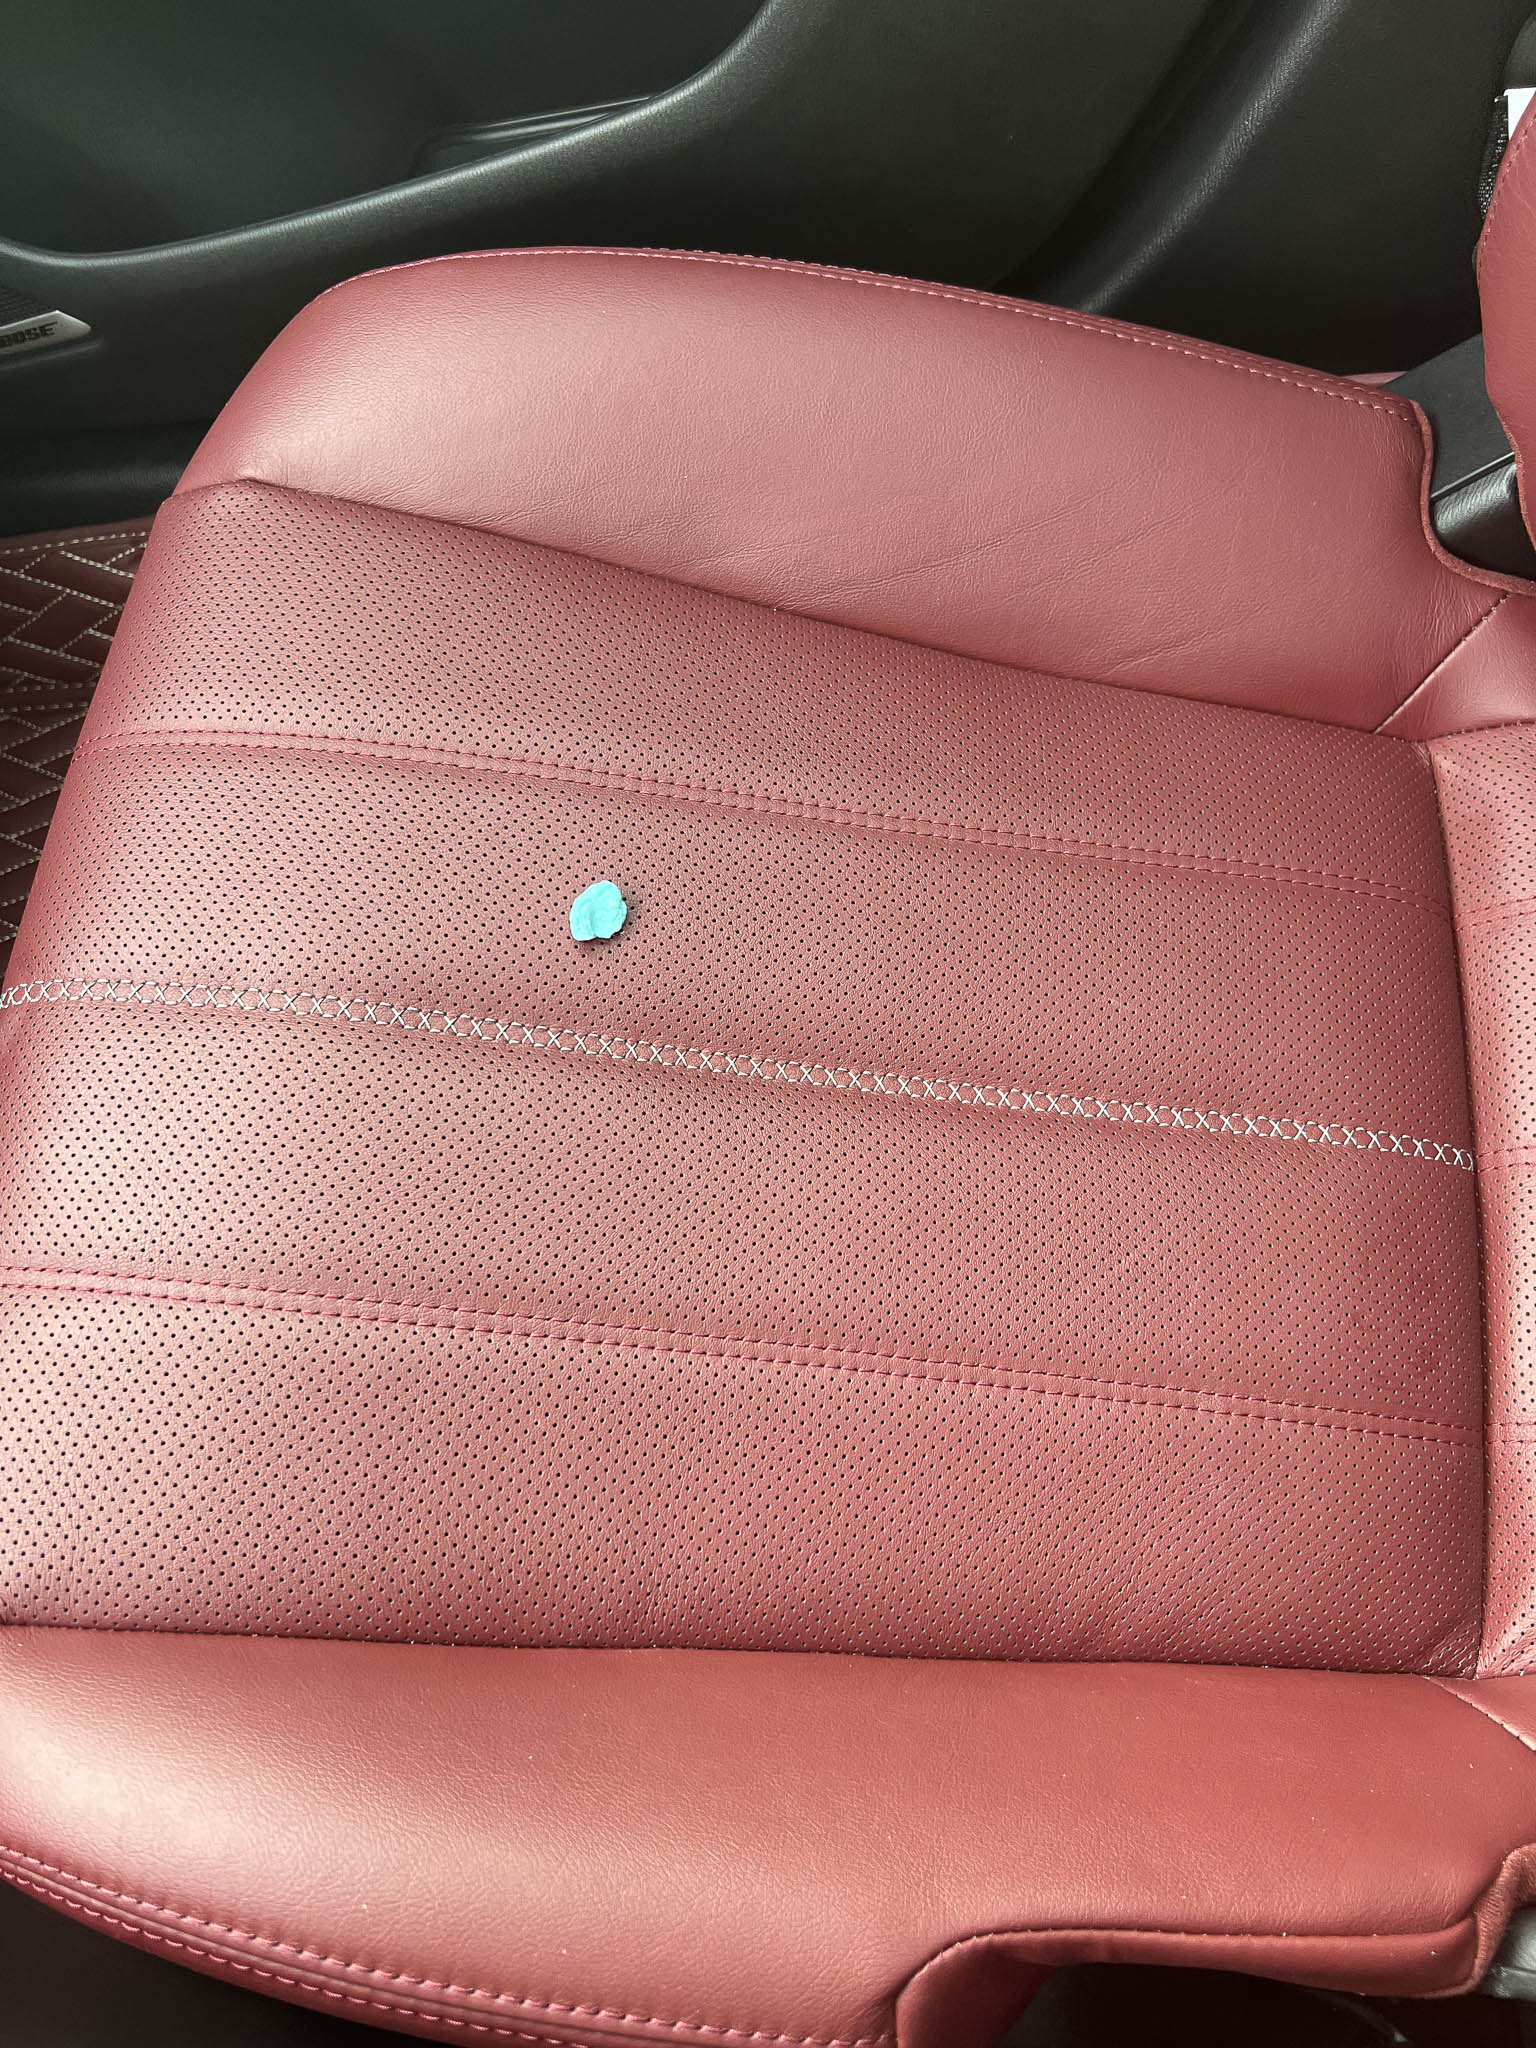 gum on car seat